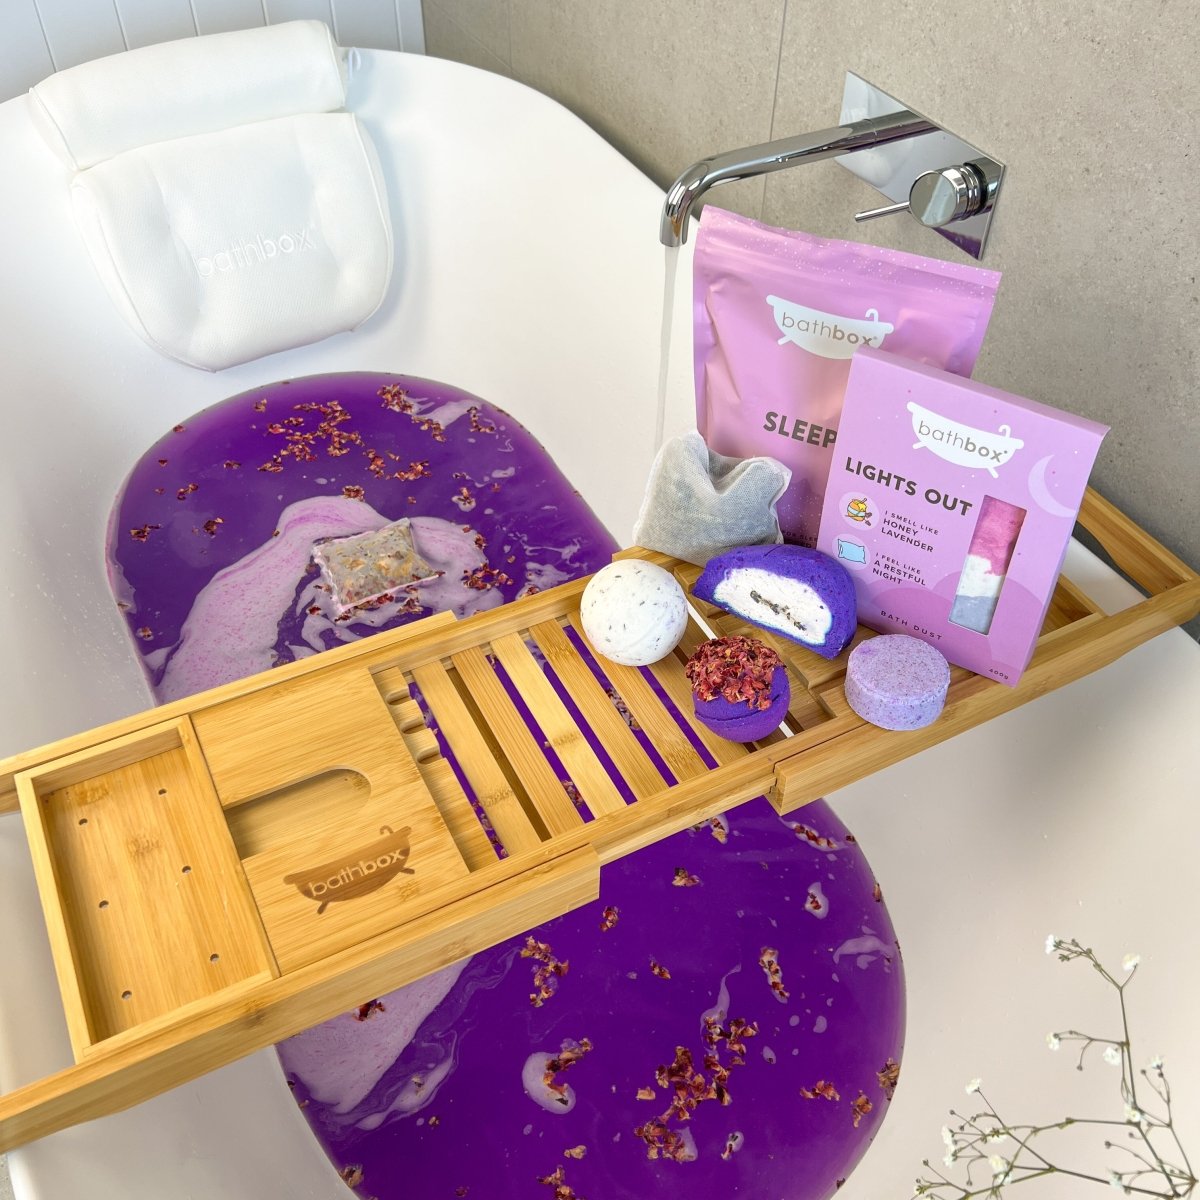 Bedtime Sleep Bath Gift Set - Bath Pillow, Bubble Bar, Bath Bombs, Salts & Soaks, Shower Steamer - Bath Box Australia